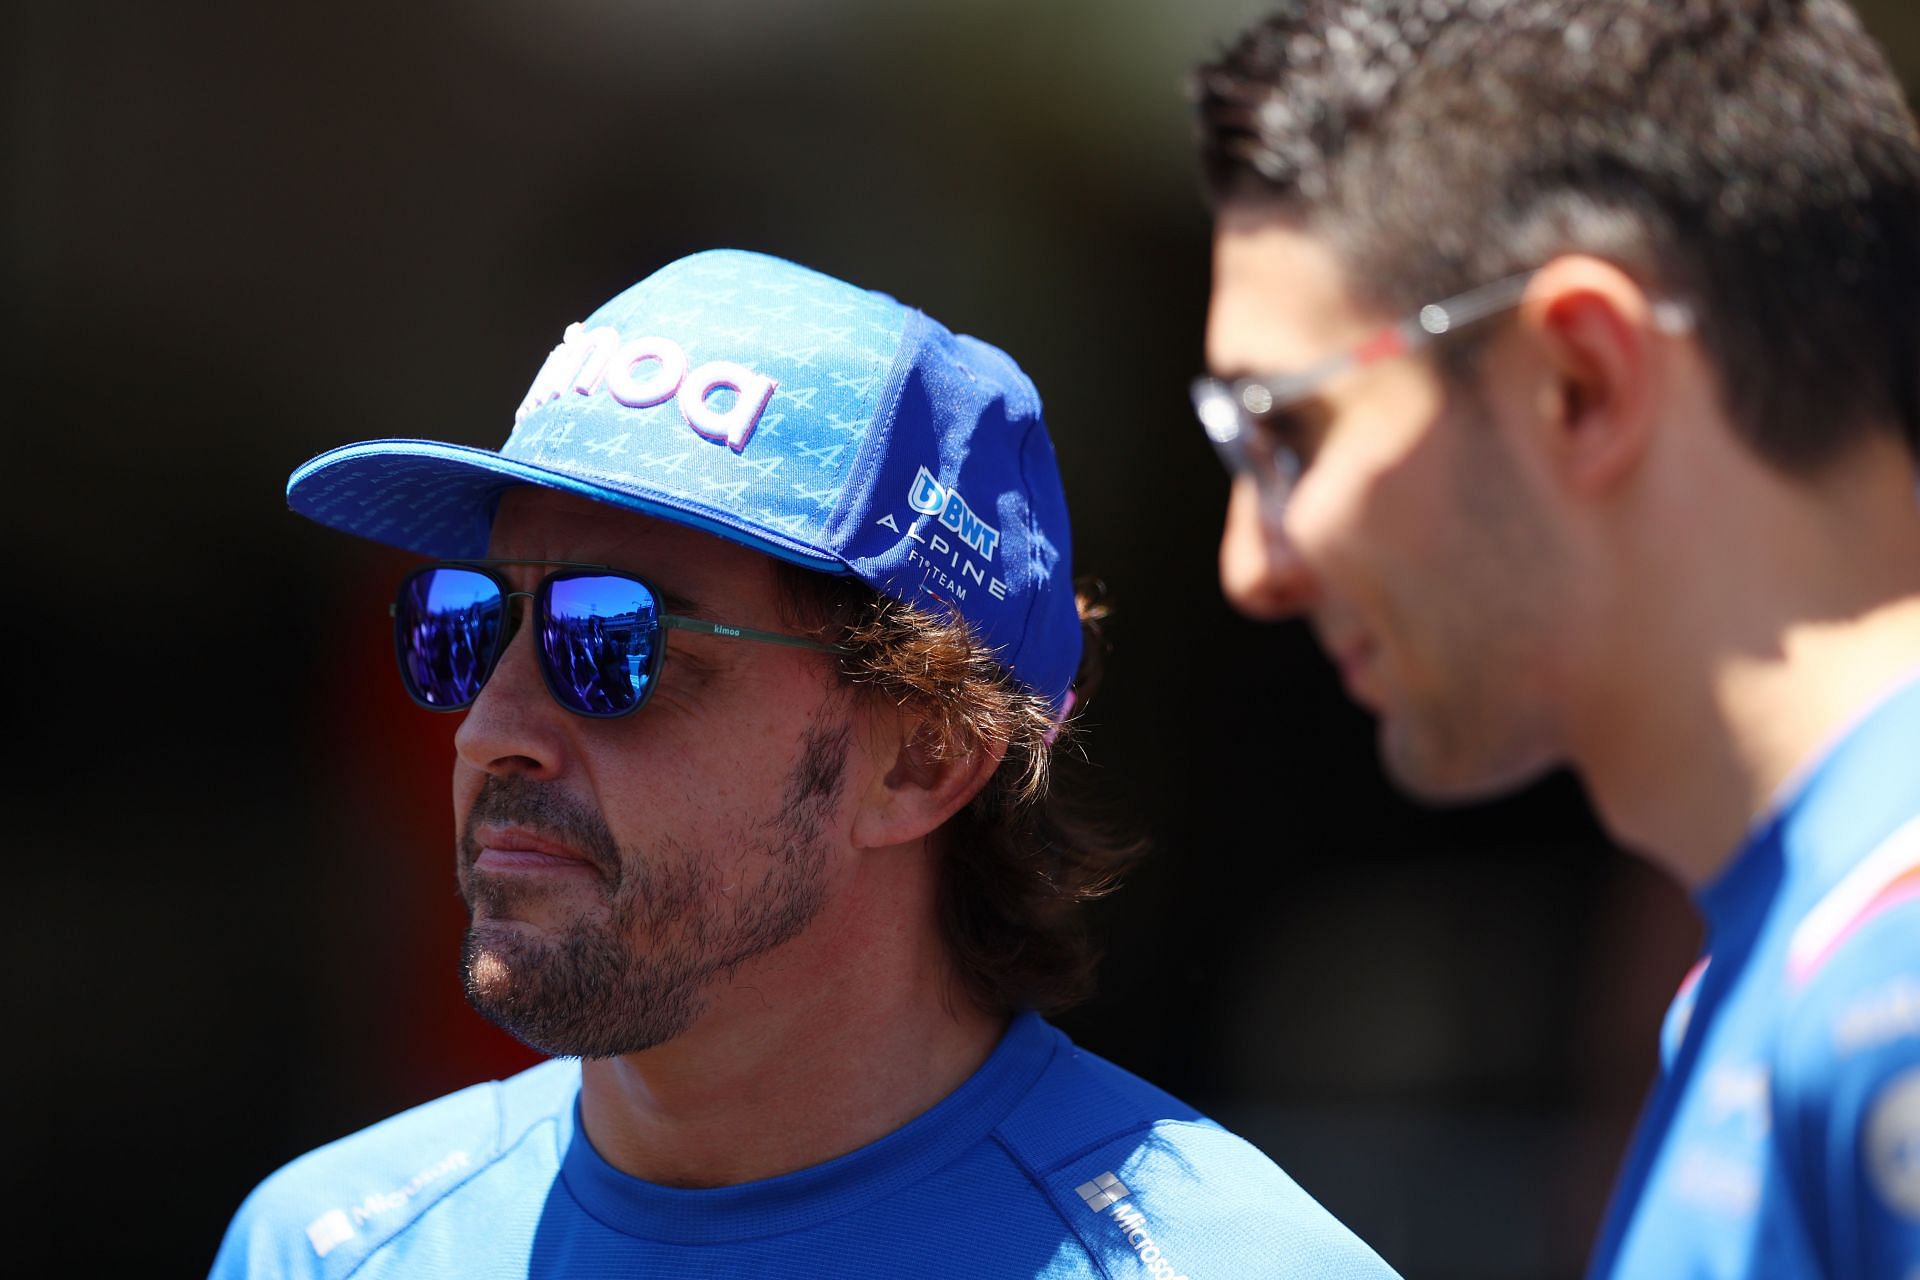 Fernando Alonso had a strong weekend at Baku